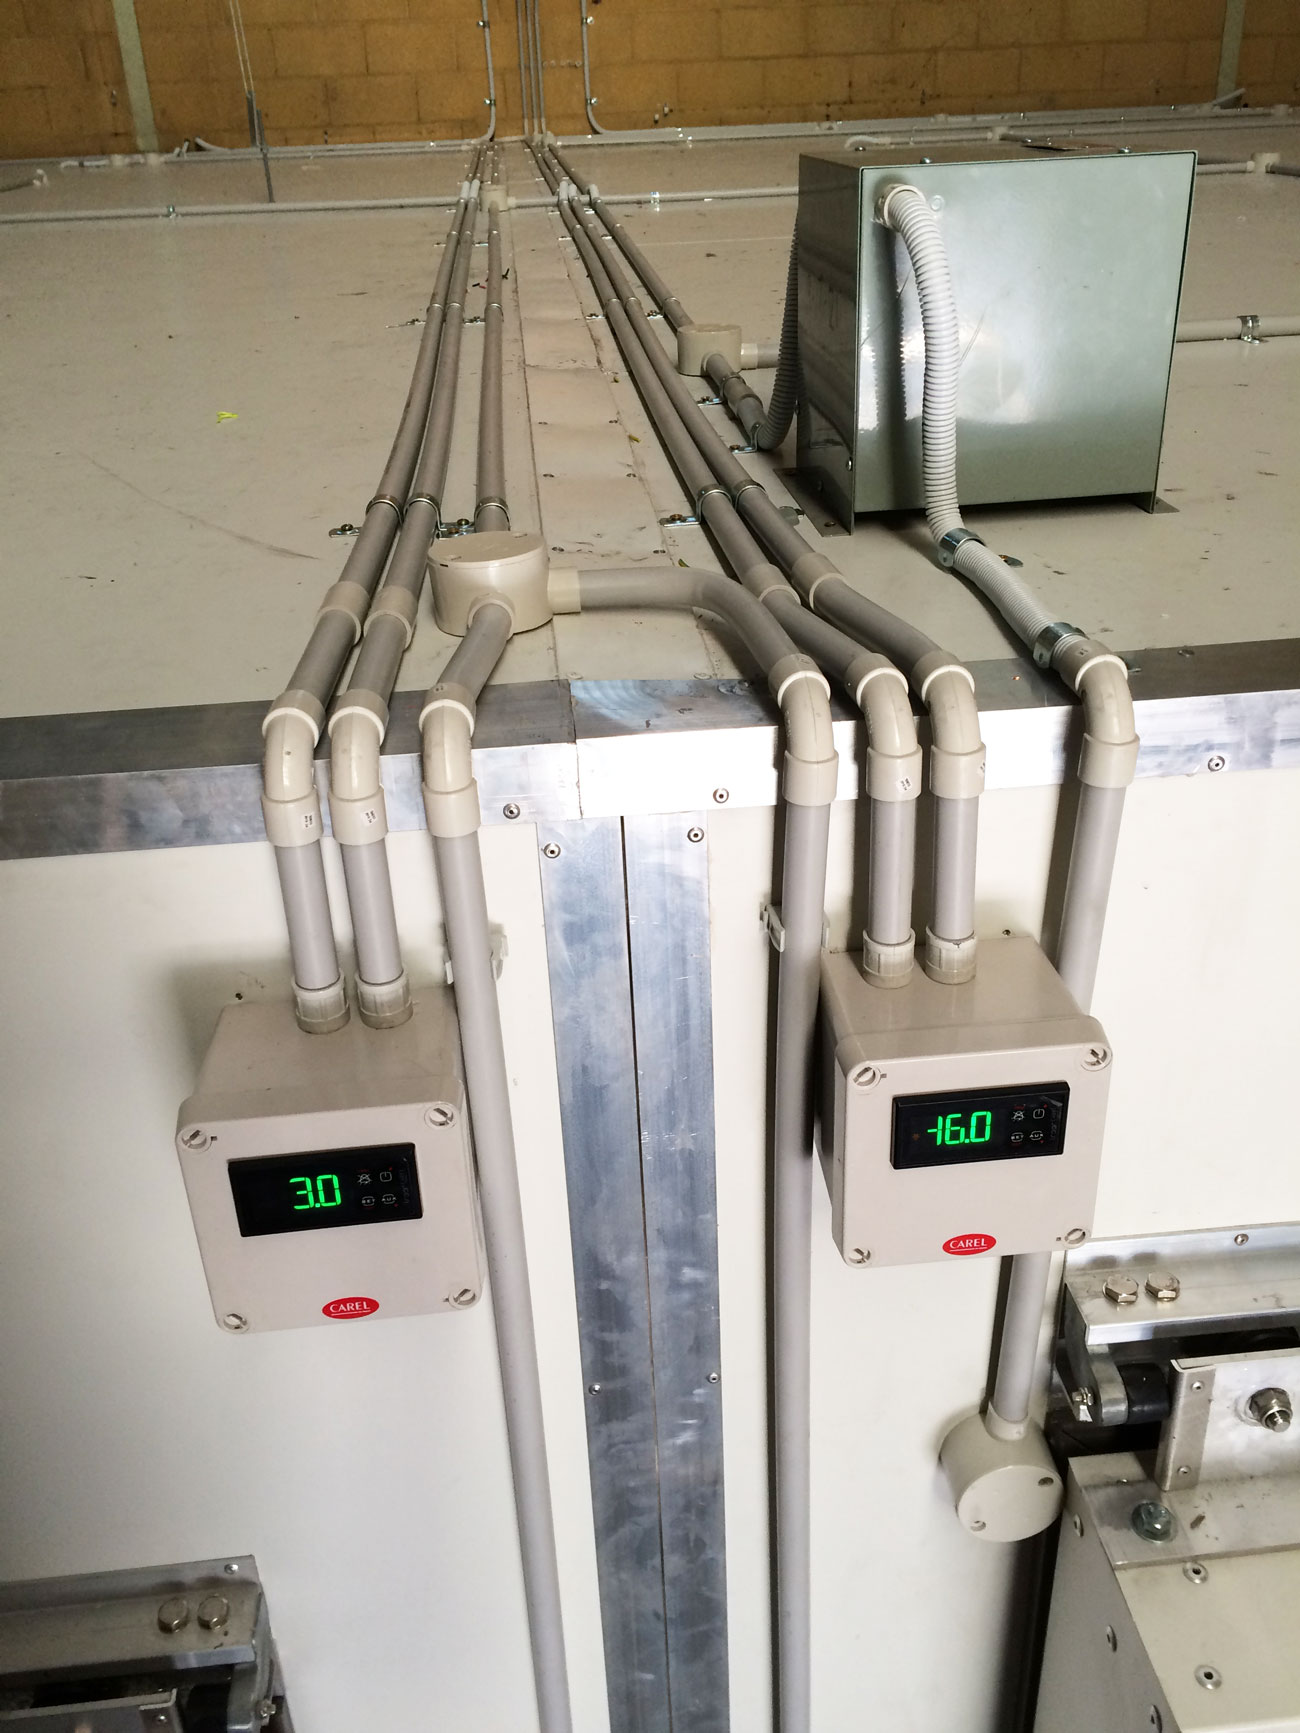 commercial refrigeration unit with temperature gauges